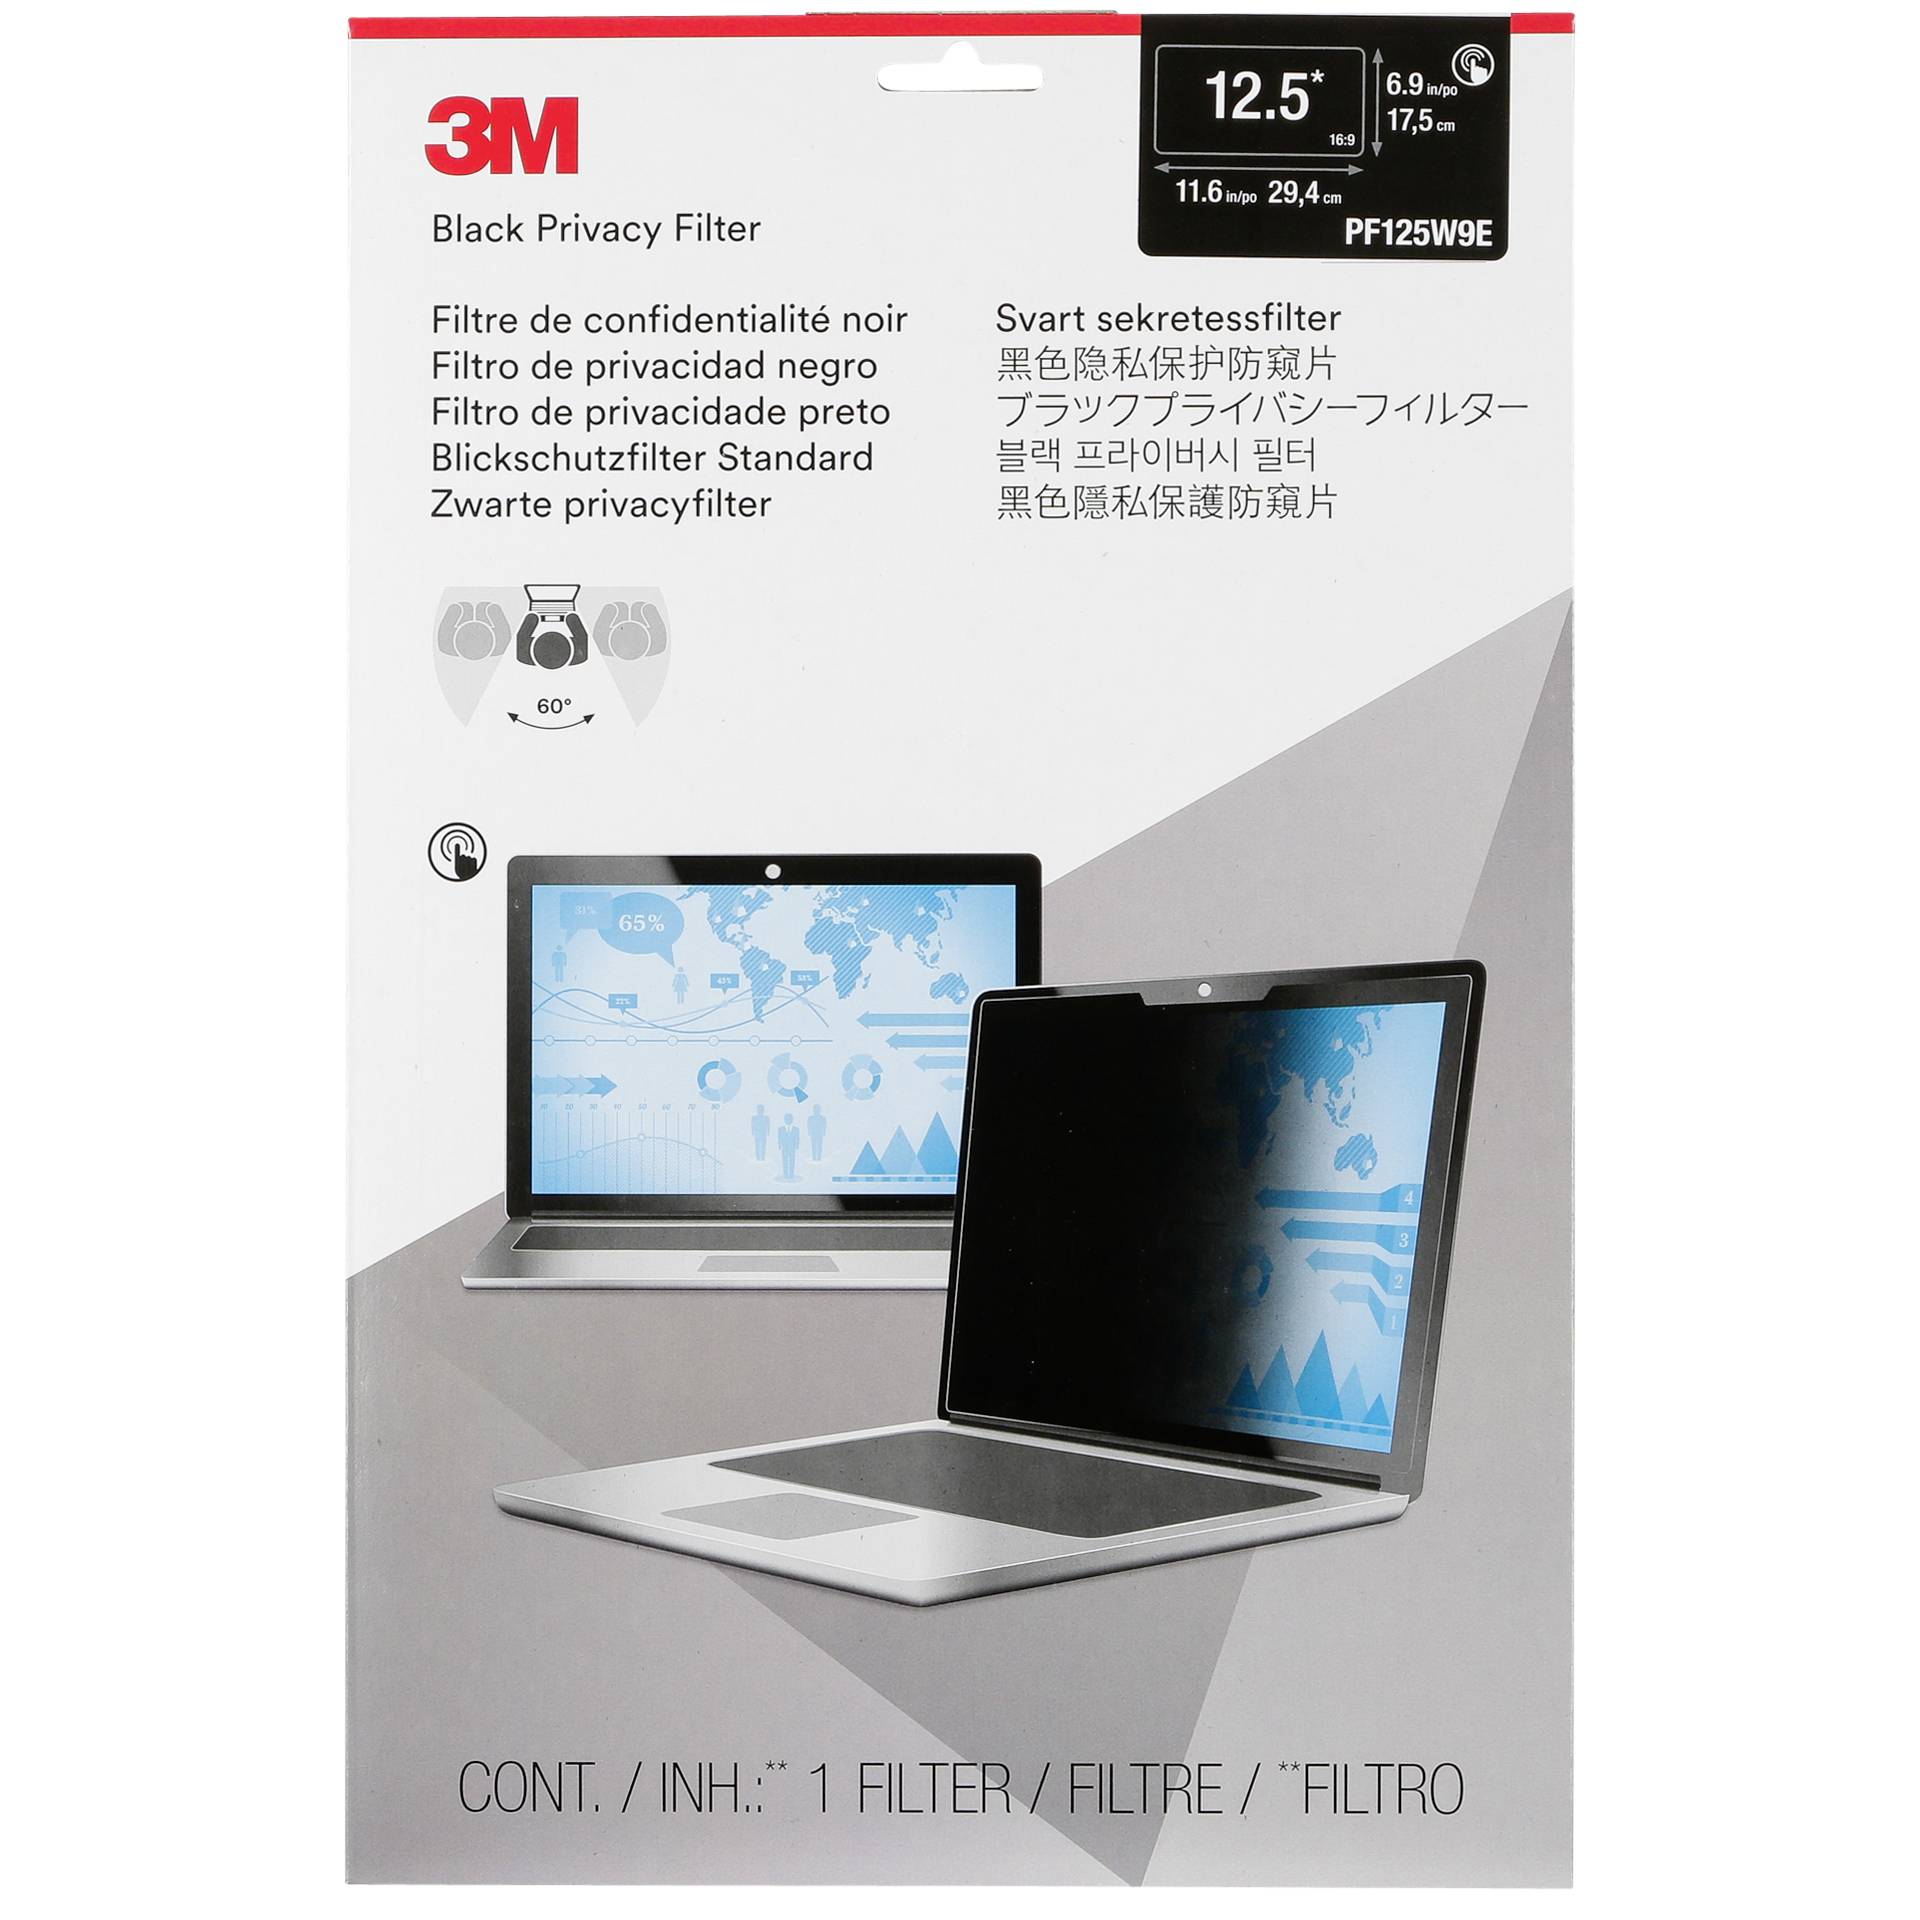 3M Touch Blickschutzfilter für 12.5in Vollbild-Laptop, 16:9, PF125W9E